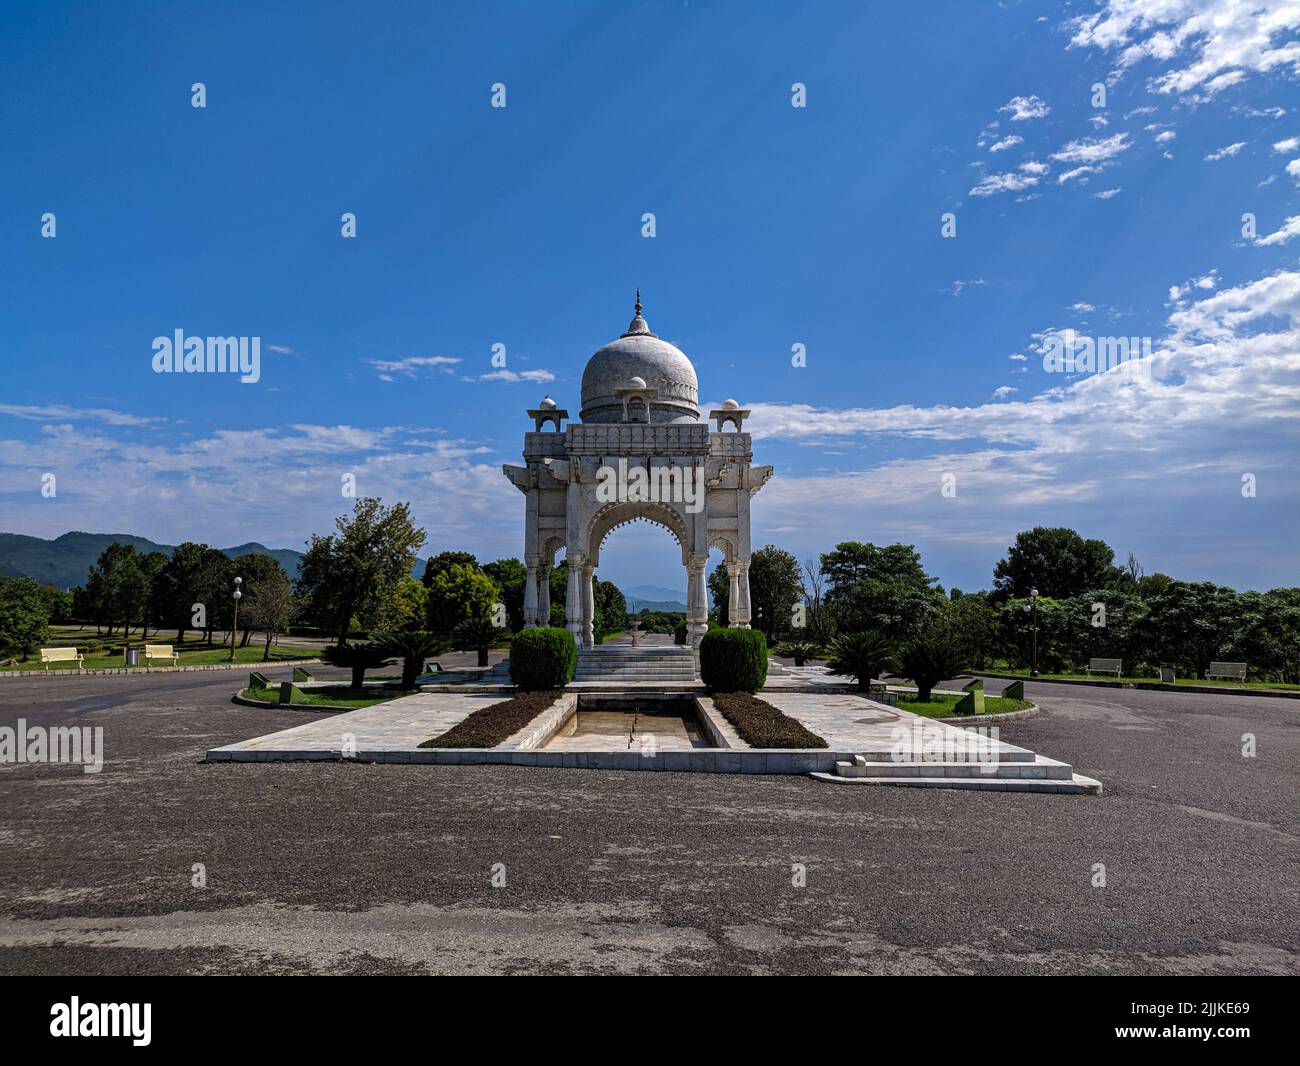 The Fatima Jinnah Park (F-9 Park) in Islamabad, Pakistan Stock Photo